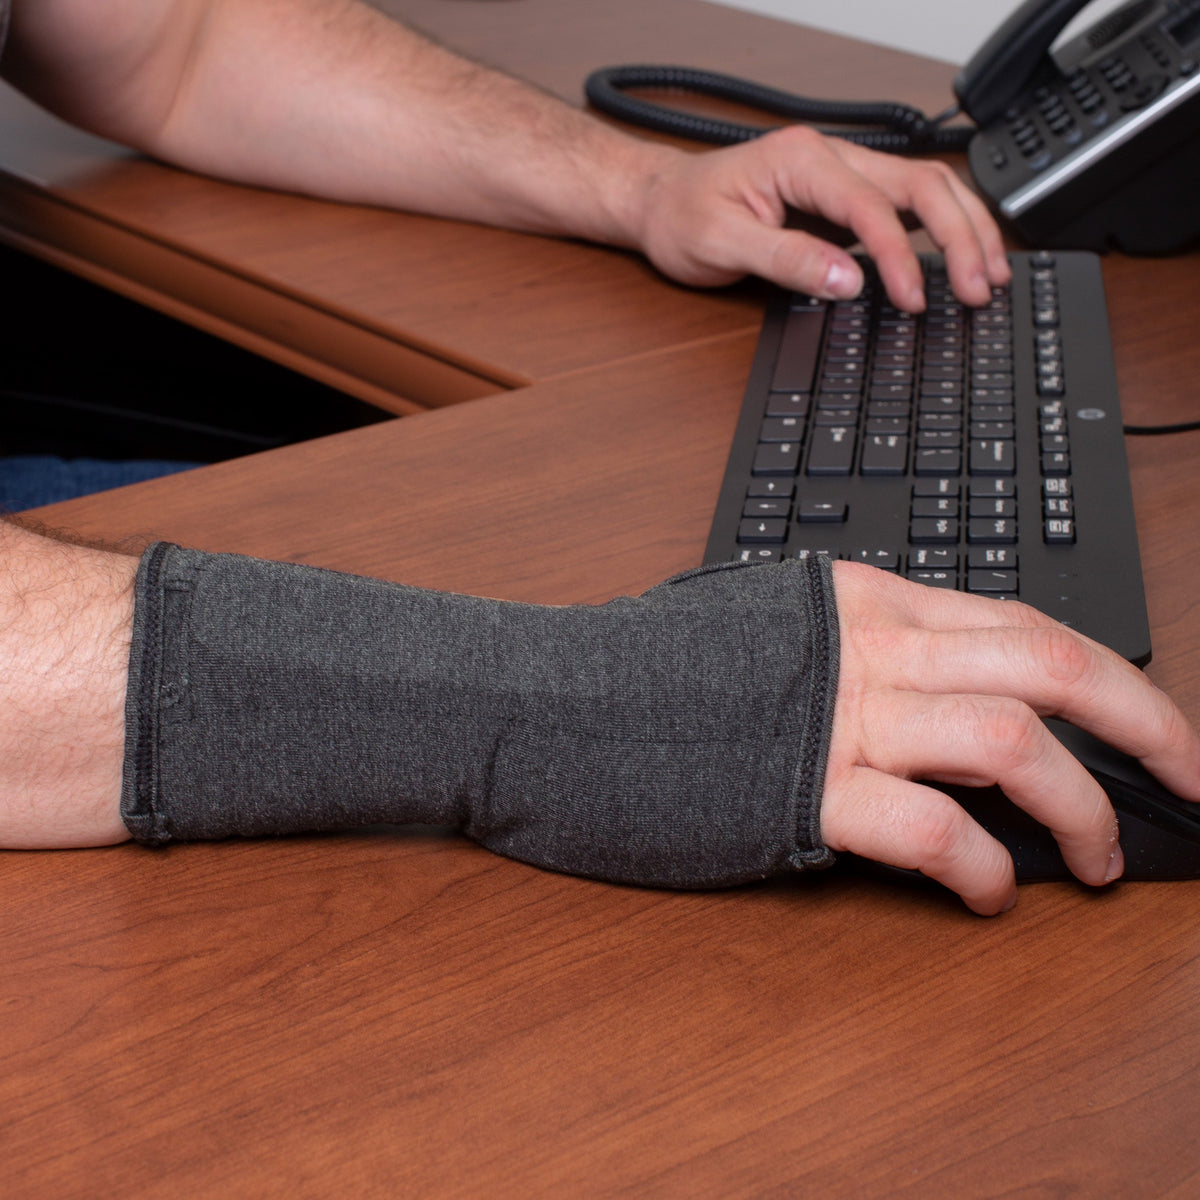 Copper Wrist Support Brace Compression Sleeve Arthritis Carpal